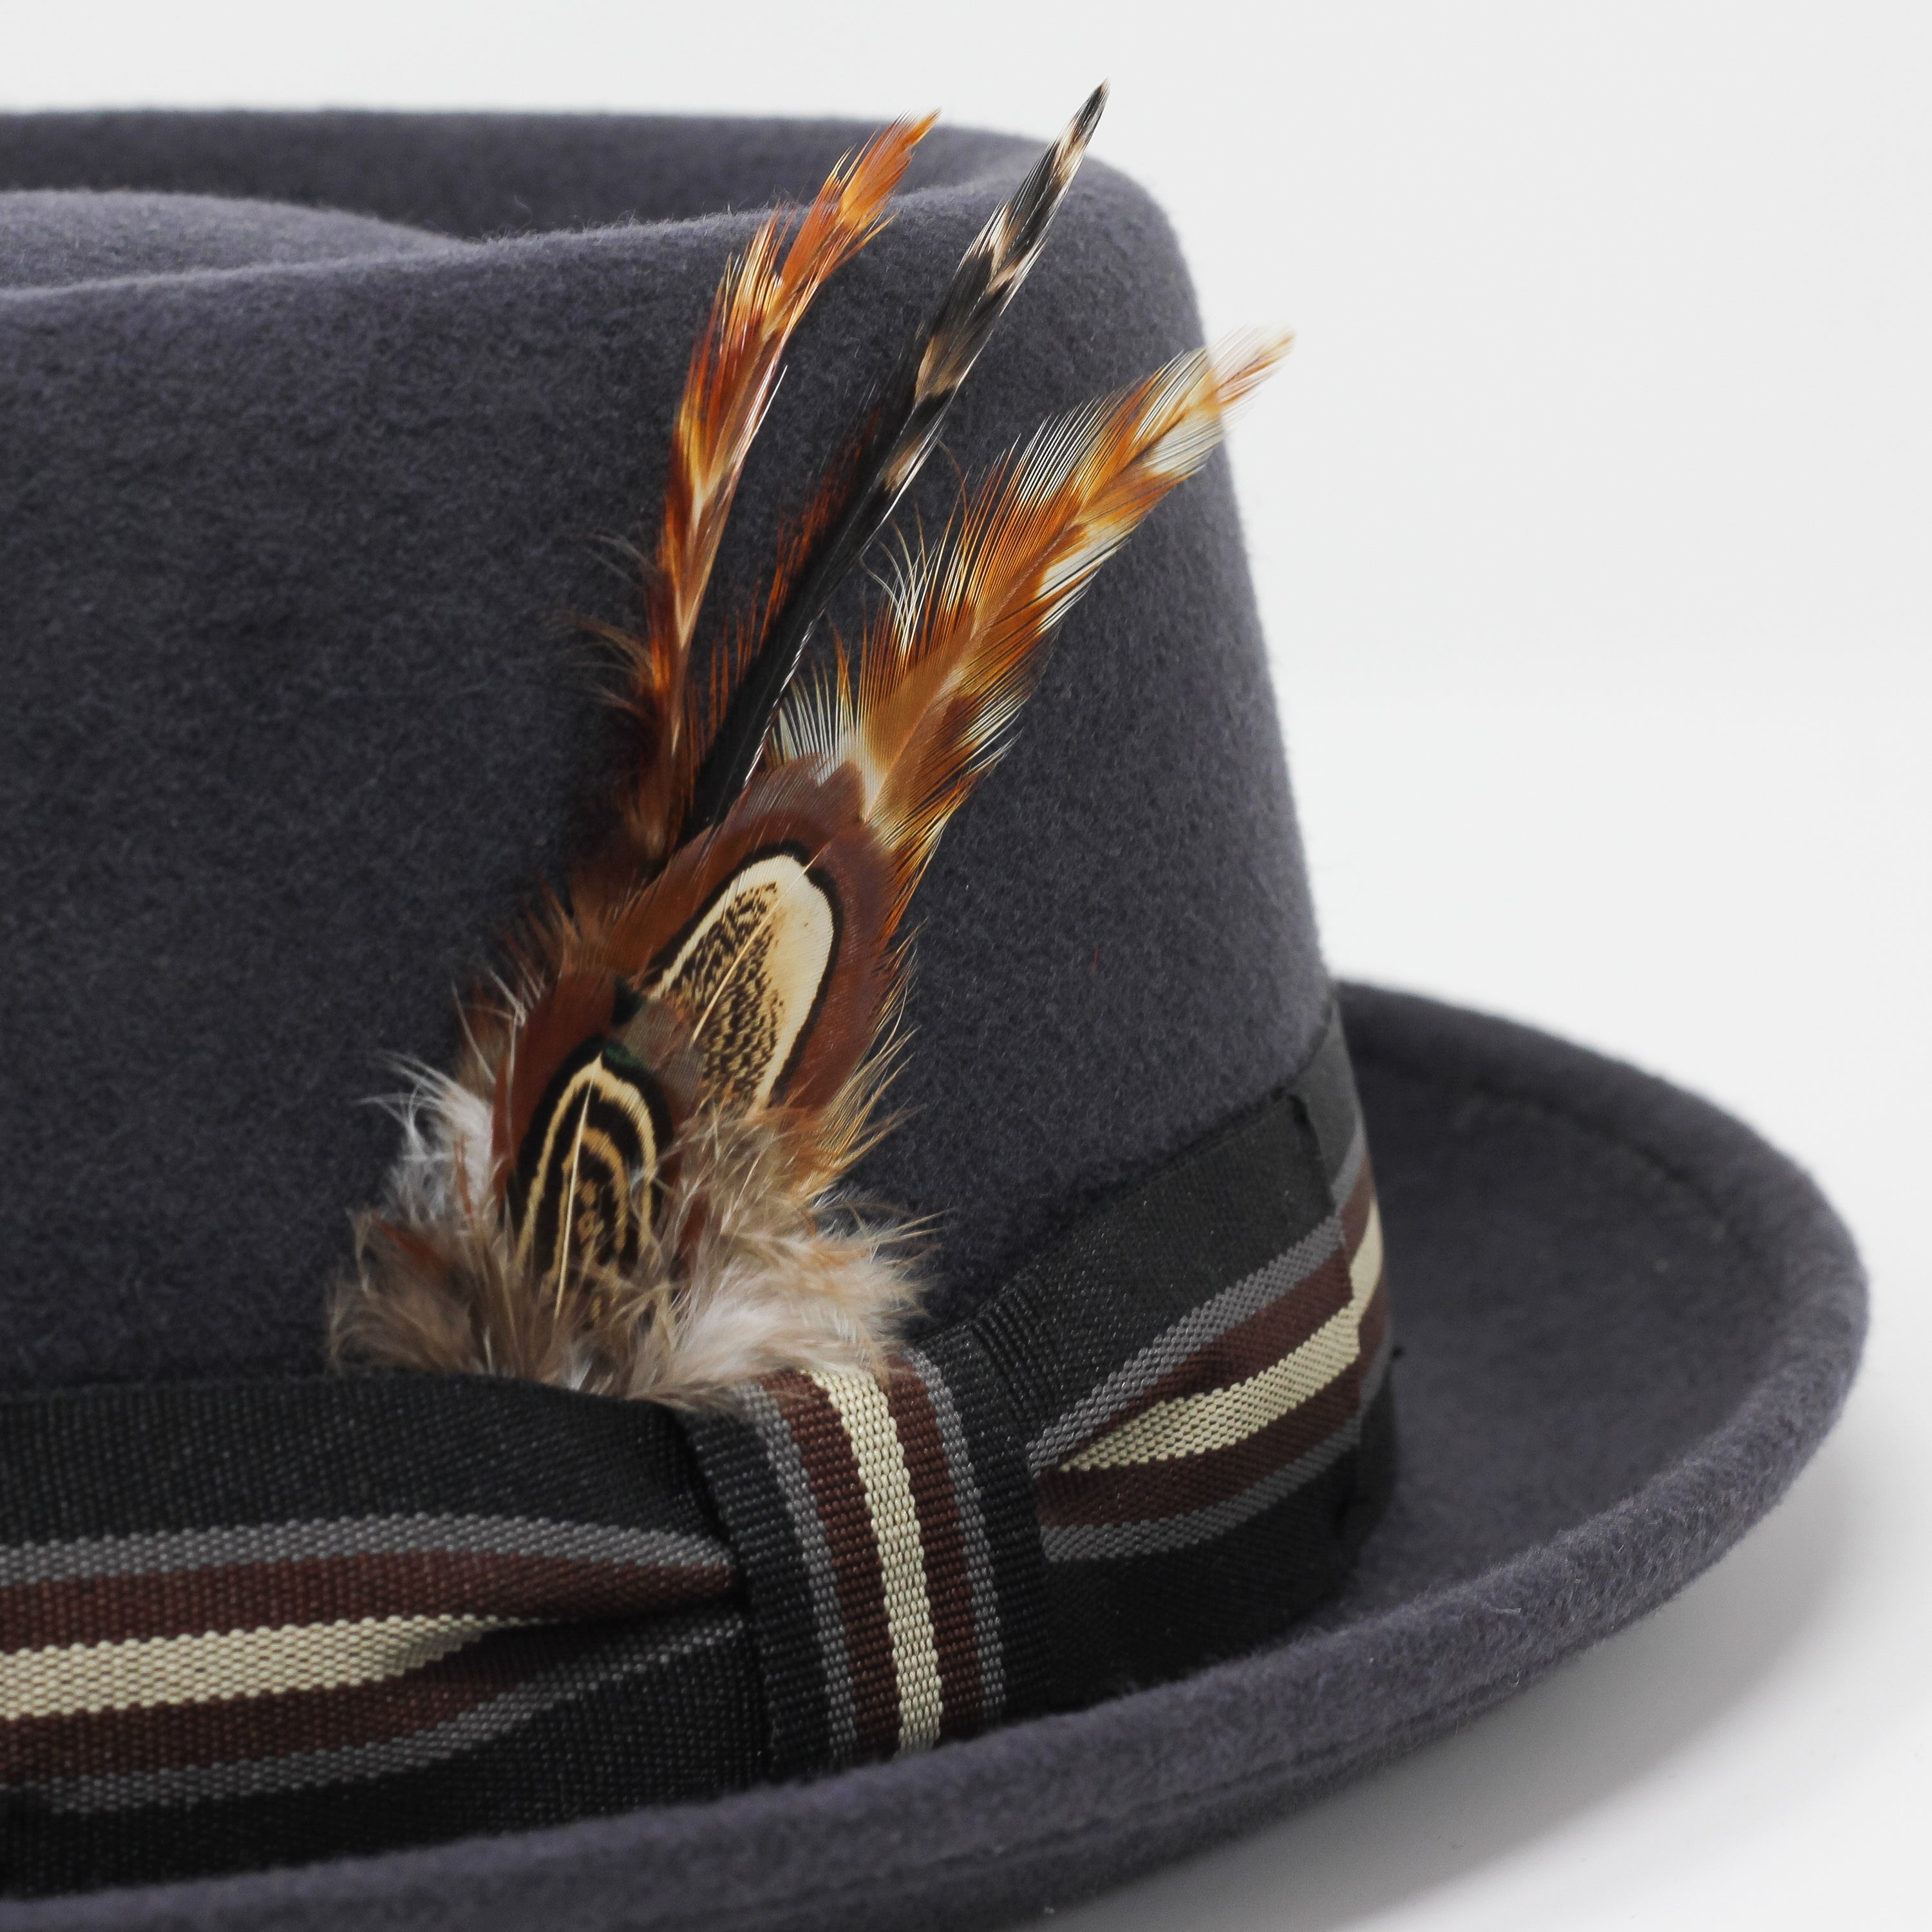 MDH Originals Smaller Hat Band Feathers Pocahantas Feathers